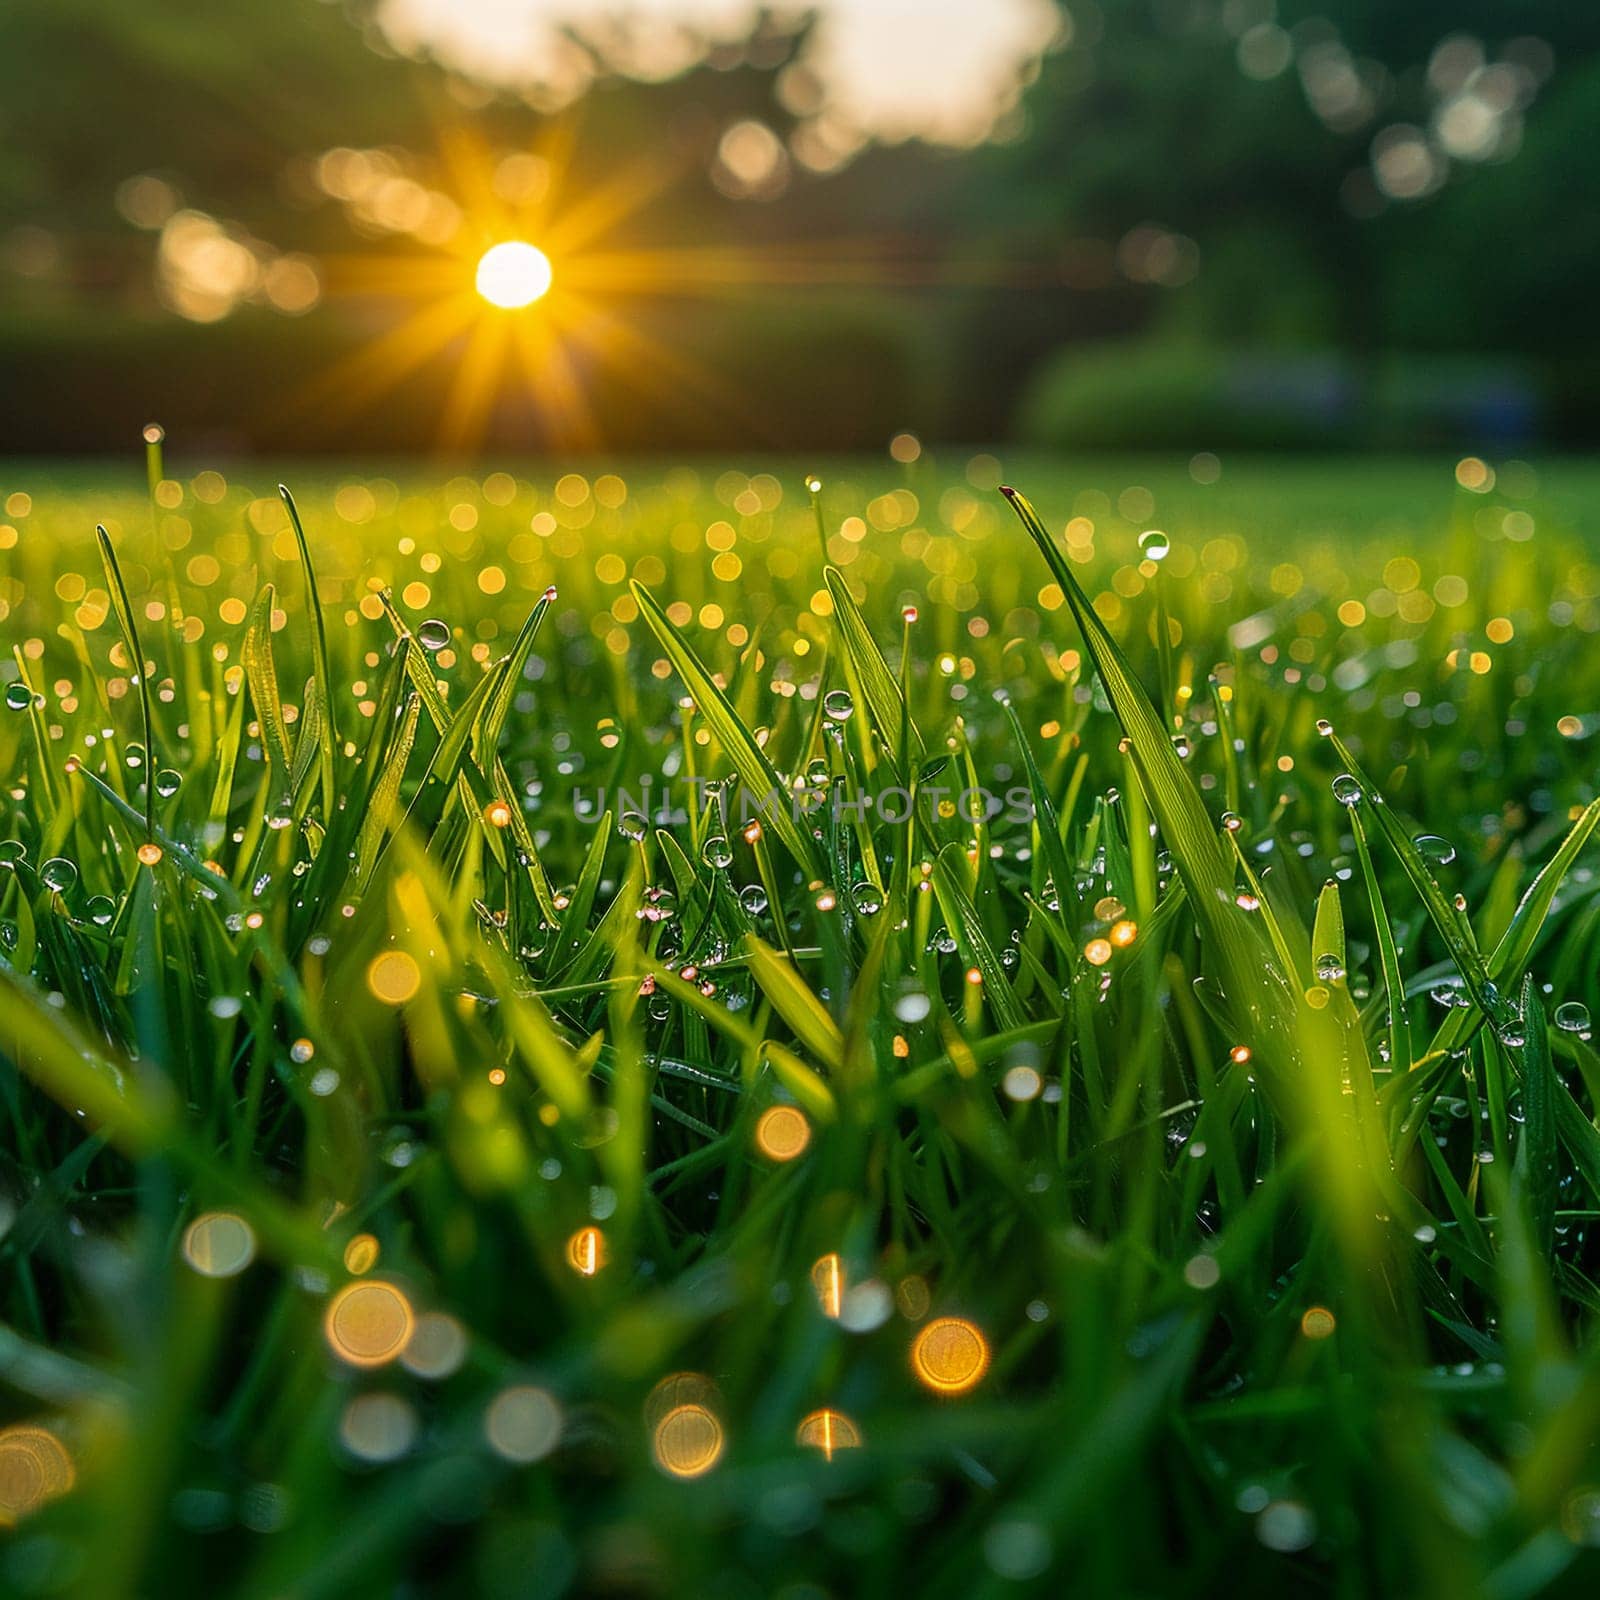 Fresh dew on vibrant green grass at sunrise, symbolizing new beginnings.